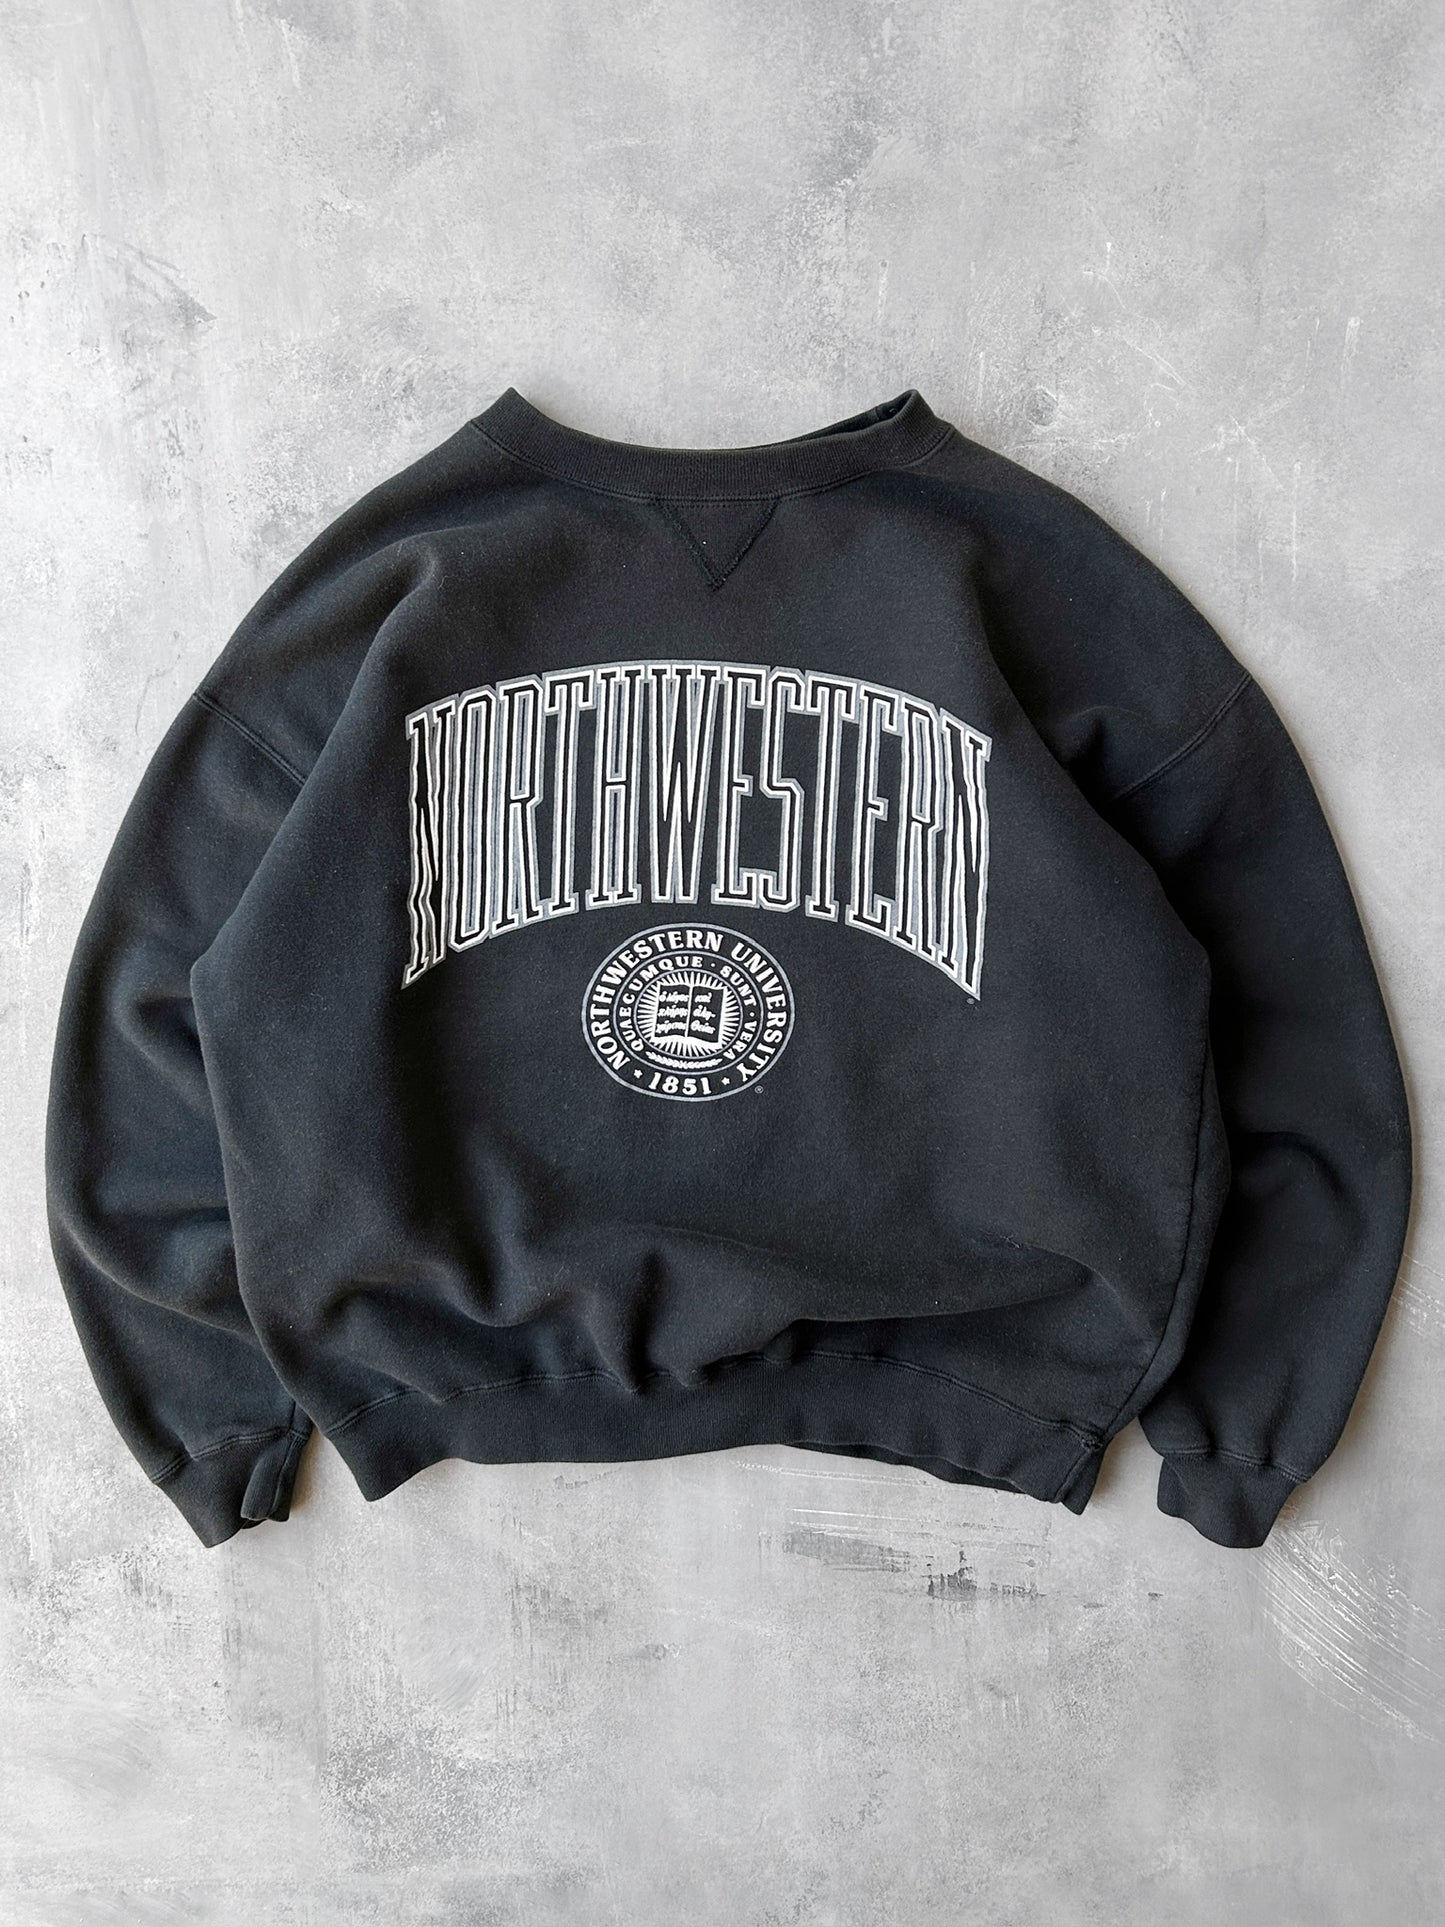 Northwestern University Sweatshirt 00's - XL